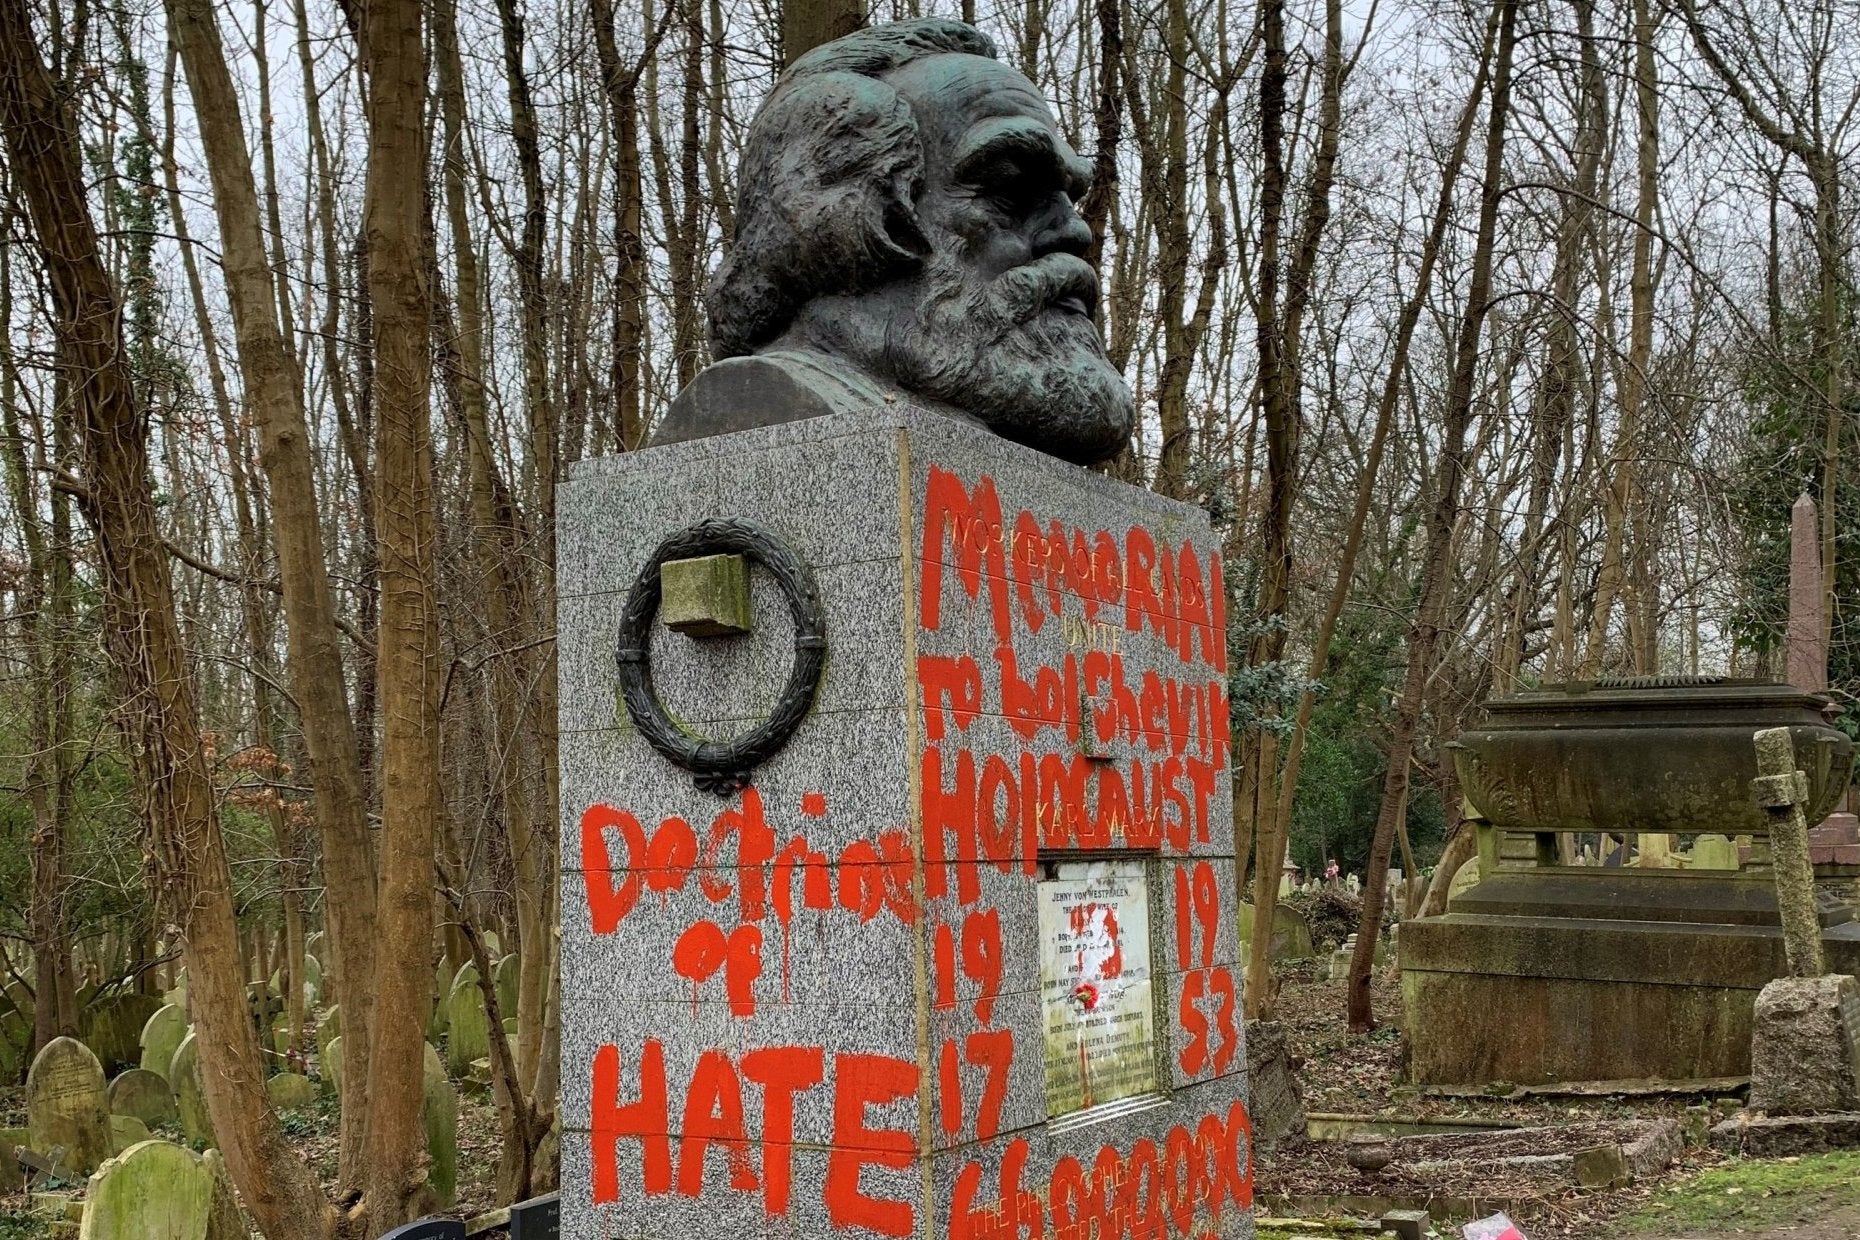 Vandals daubed graffiti reading "doctrine of hate" on Karl Marx's grave